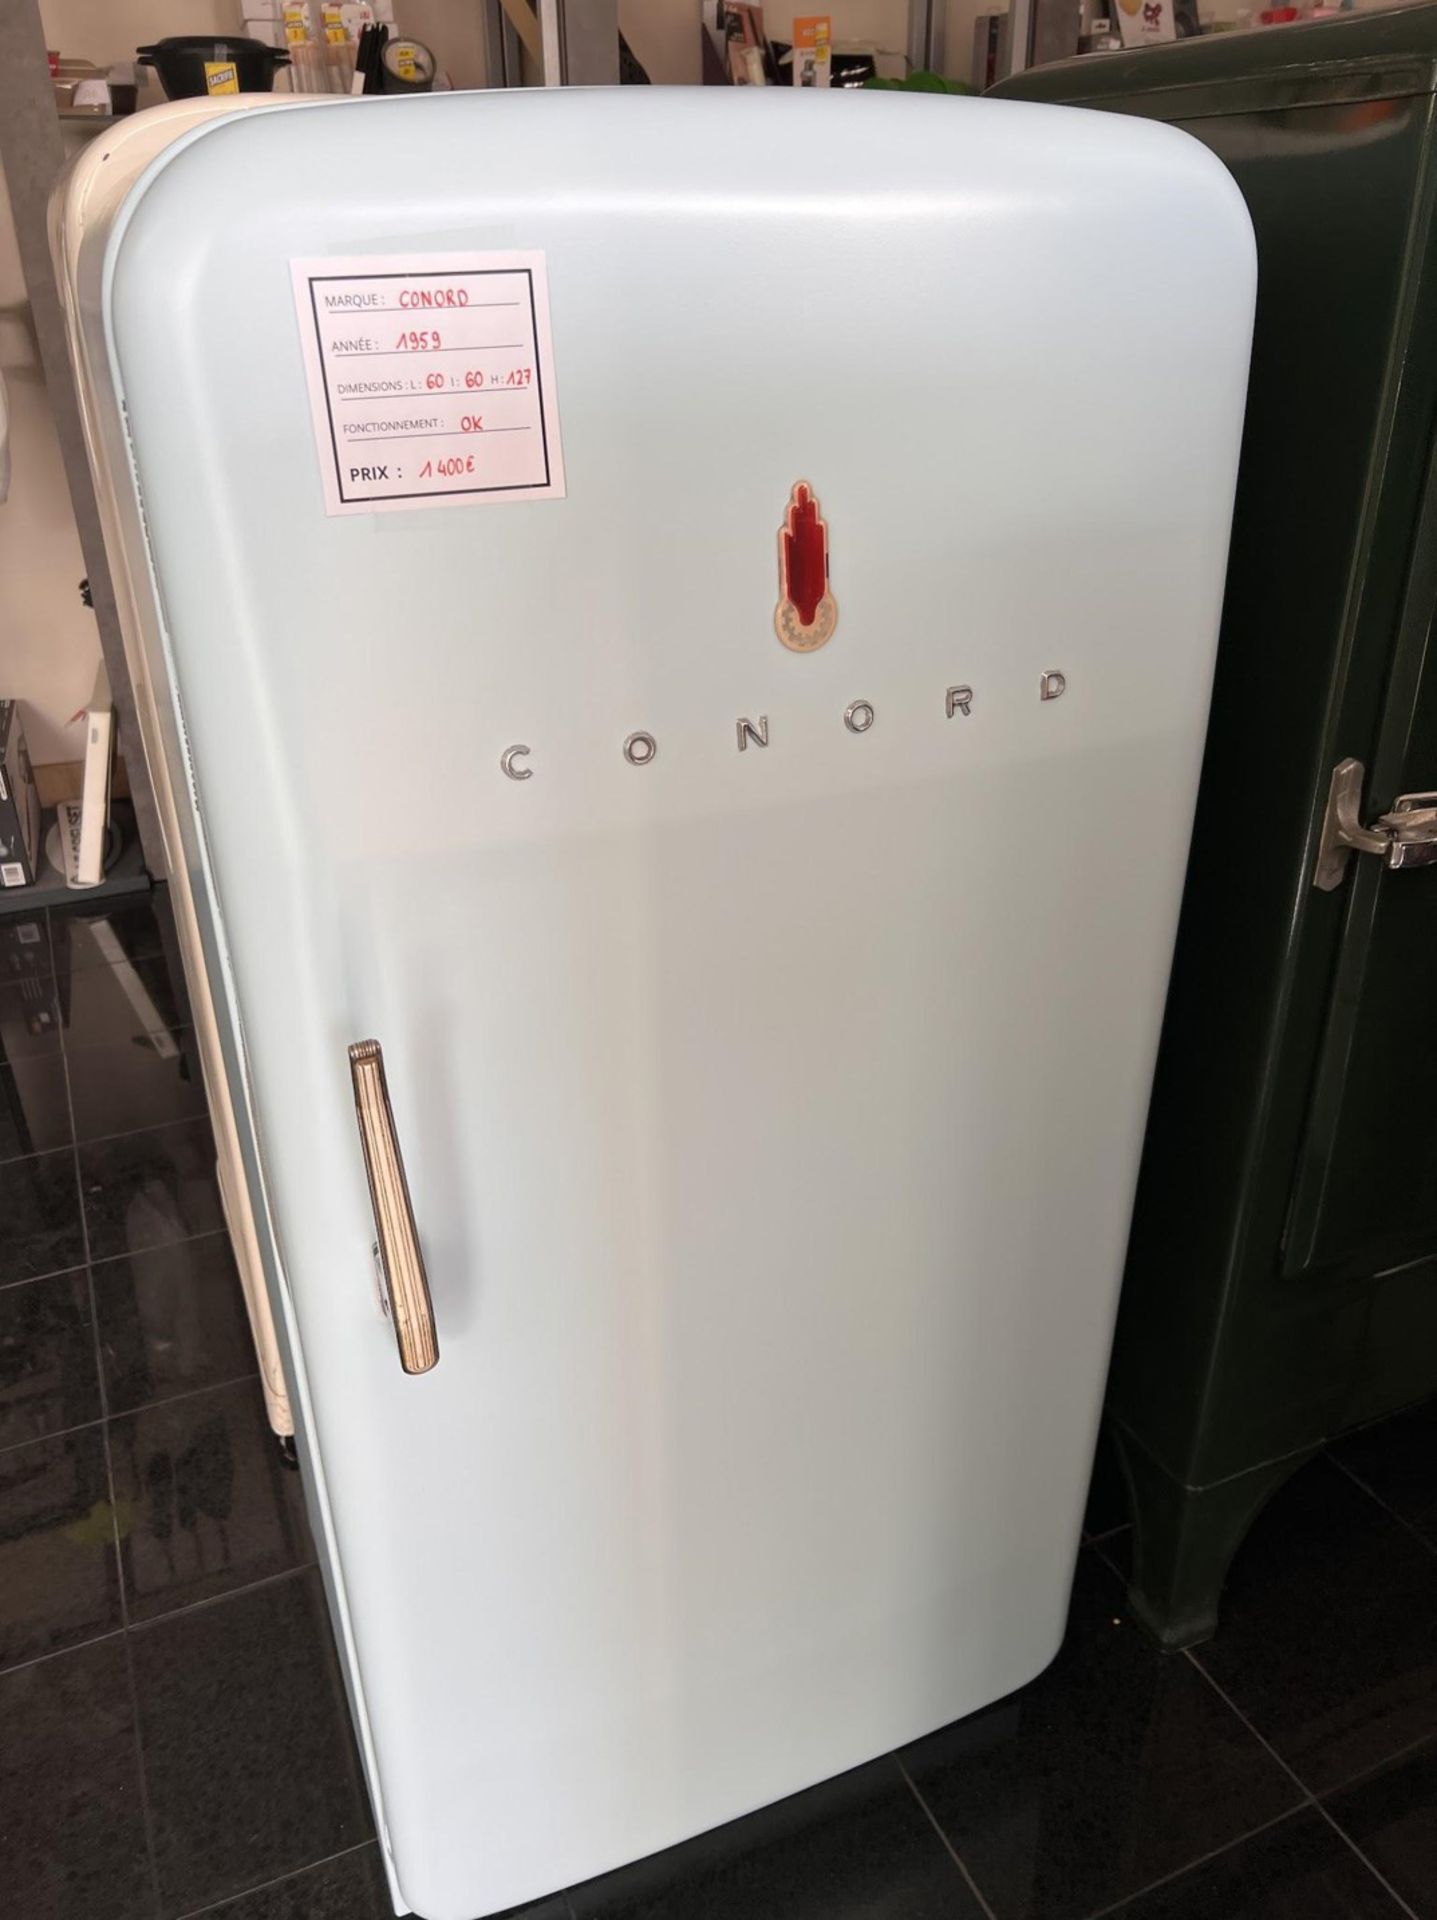 1959 Conord Refrigerator in Matt Baby Blue Color